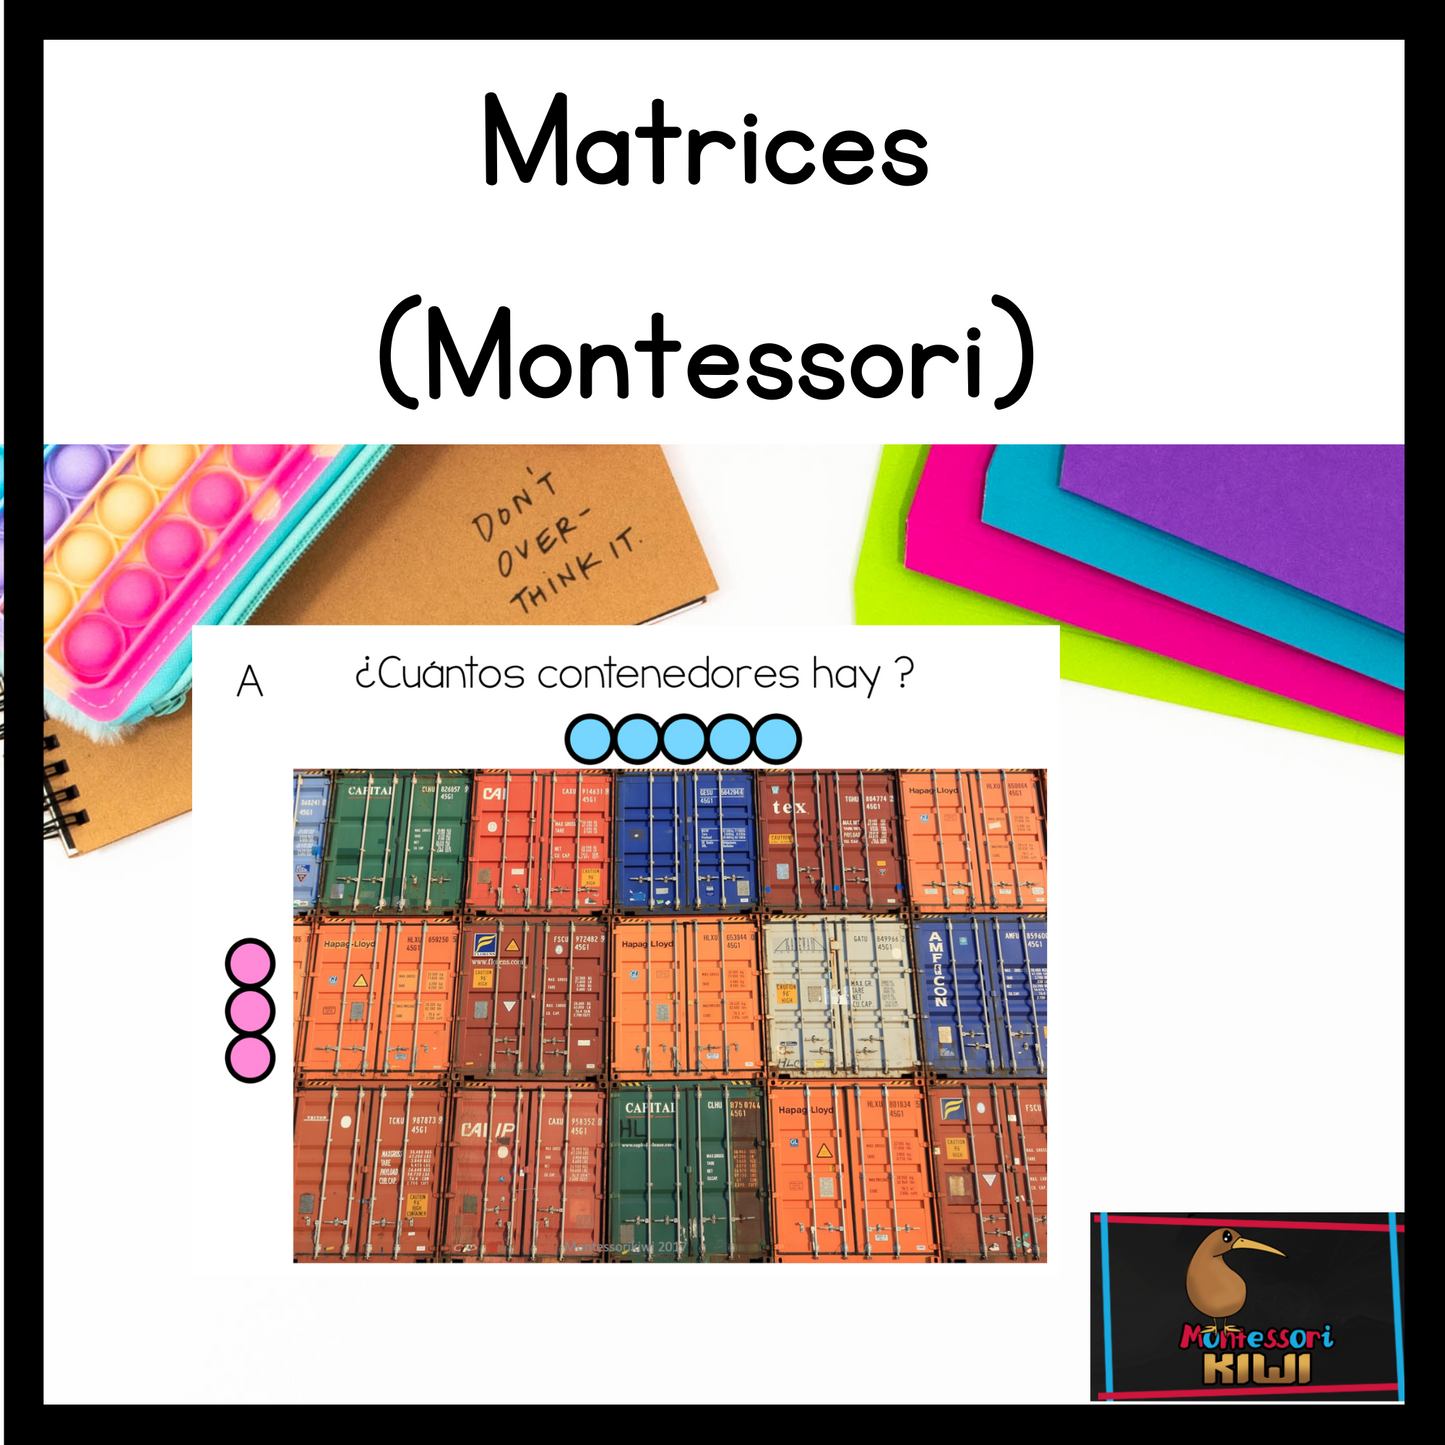 Matrices (Montessori Arrays) - montessorikiwi